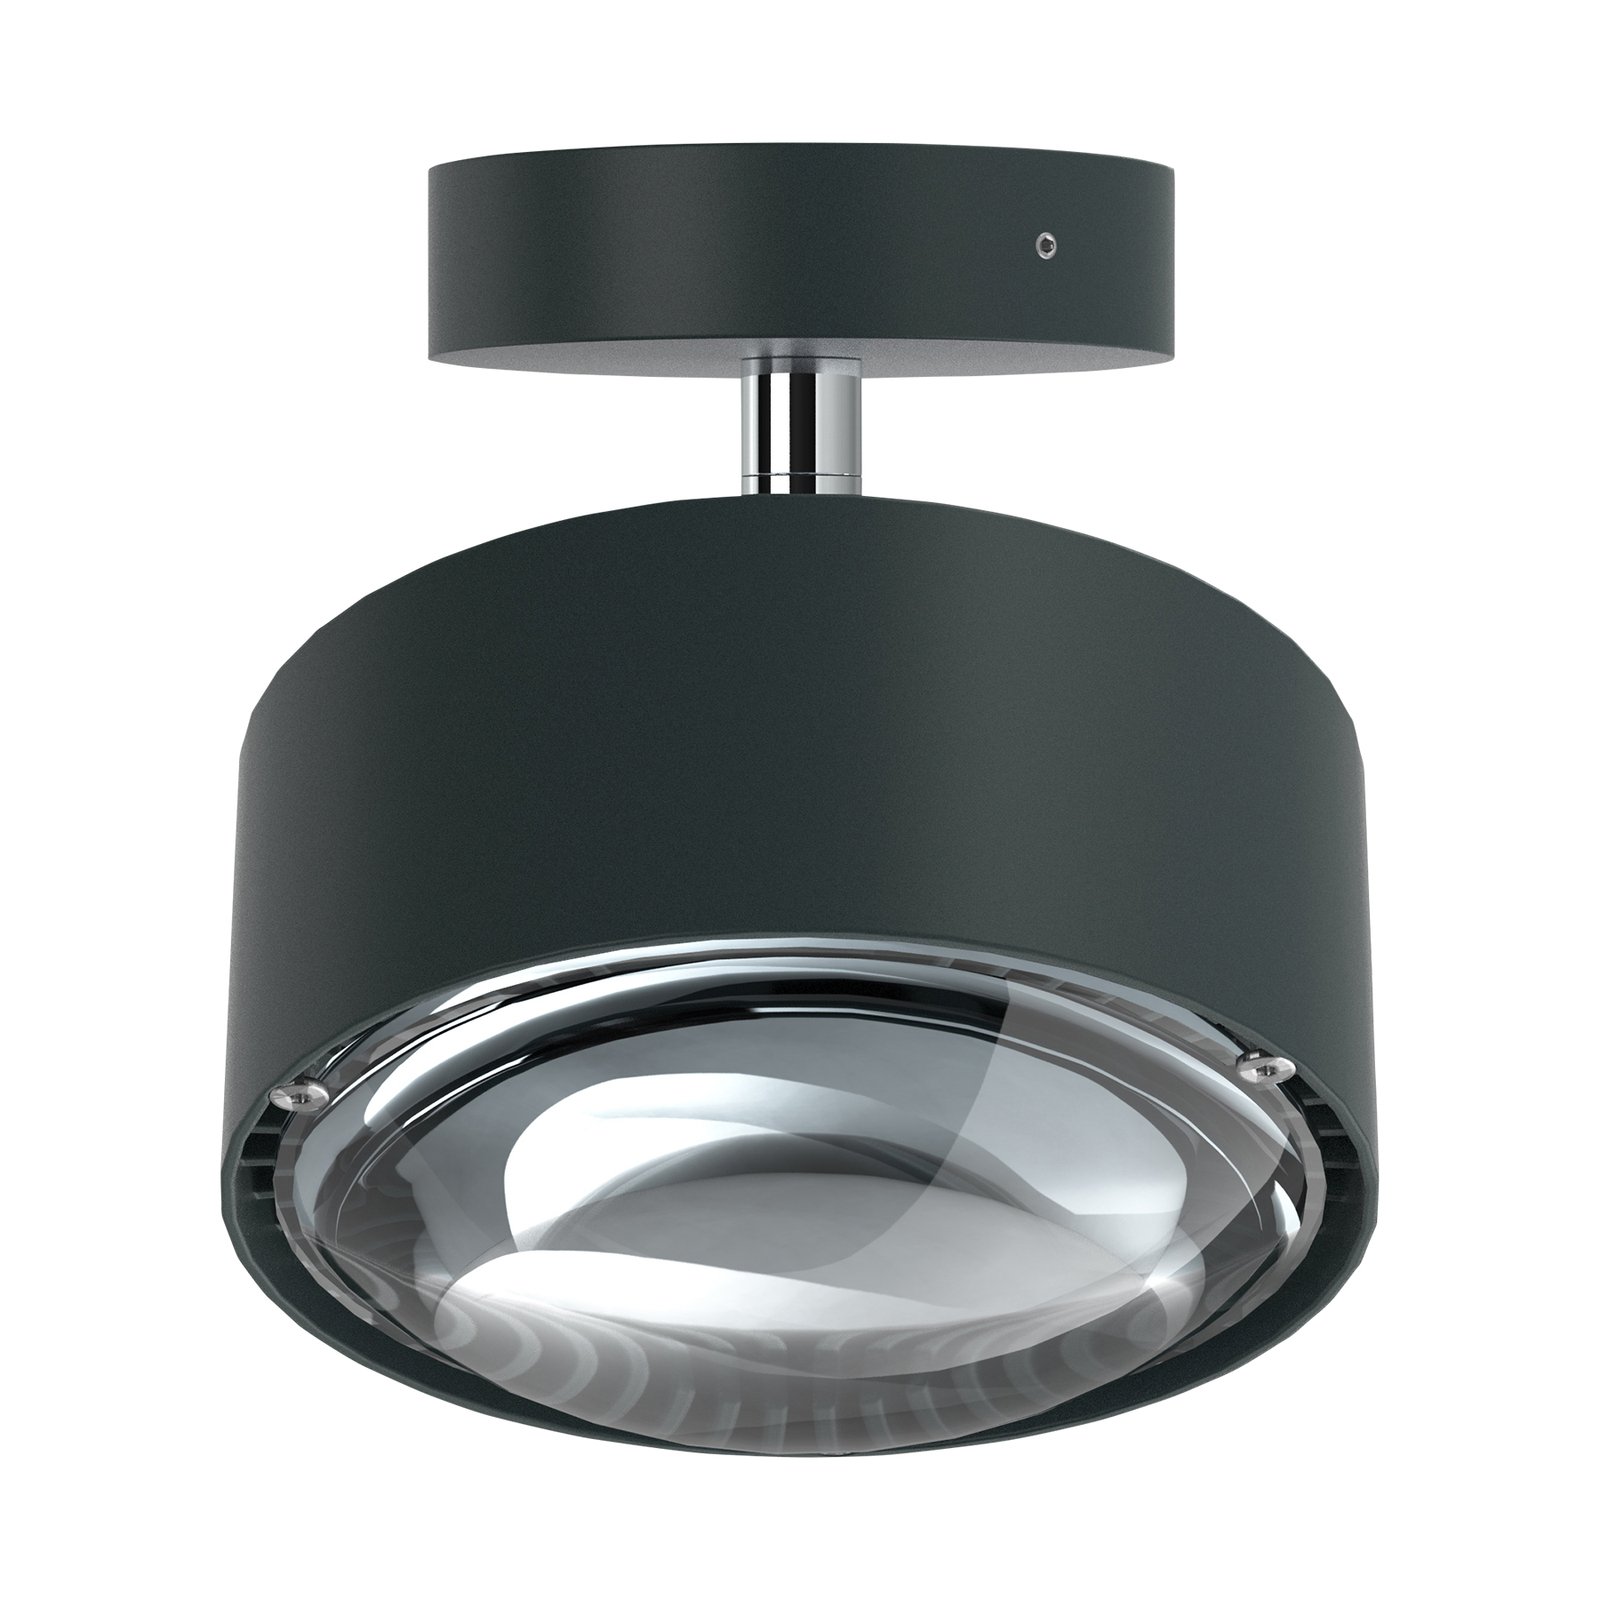 Puk Maxx Turn spot LED lentille claire 1 lampe anthracite